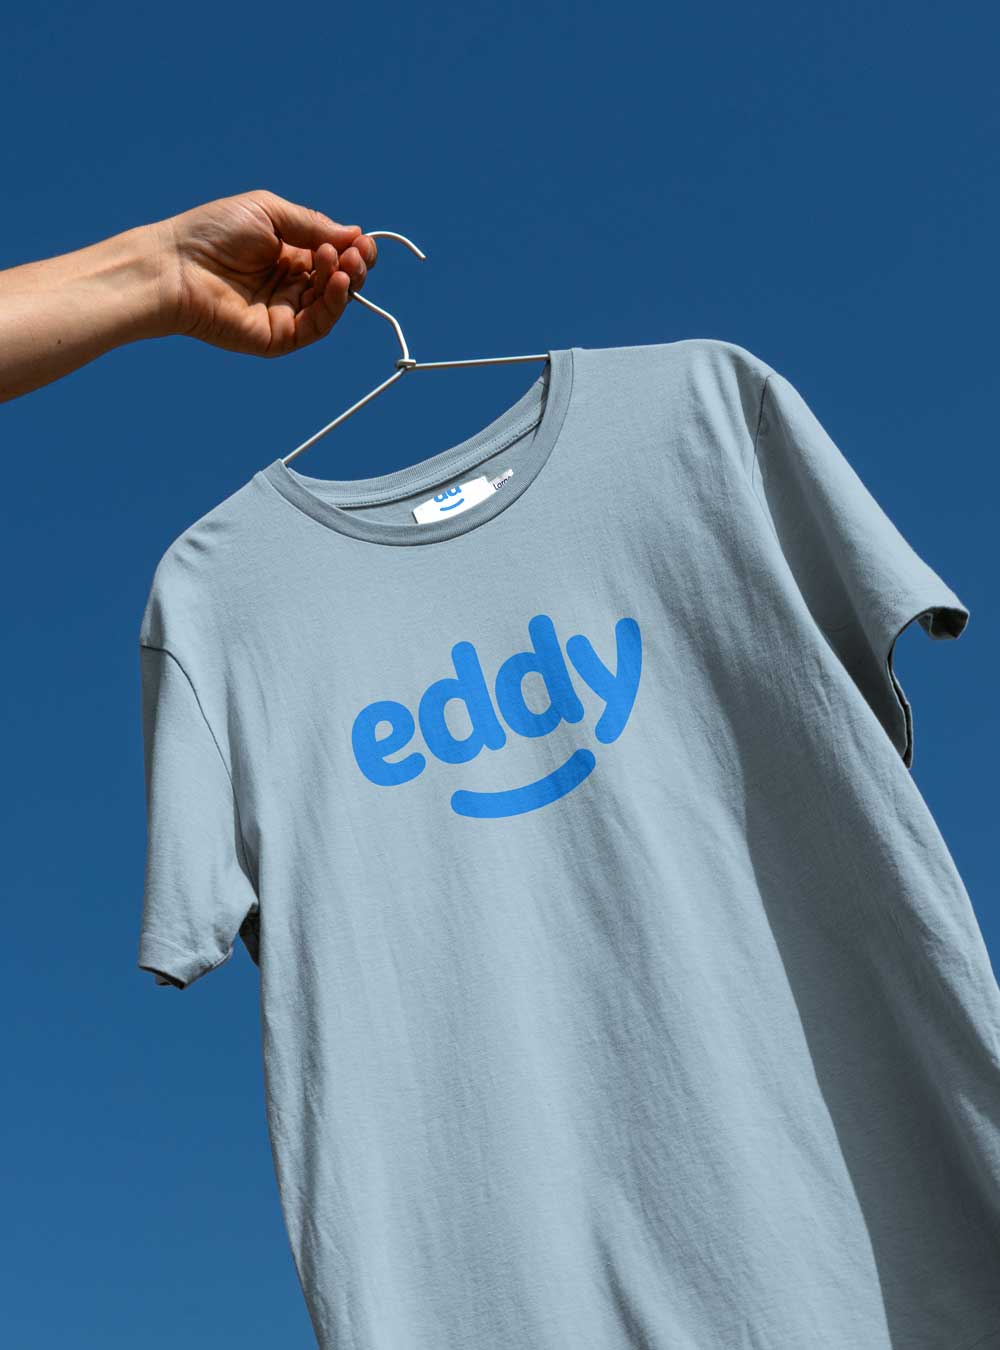 eddy_shirt